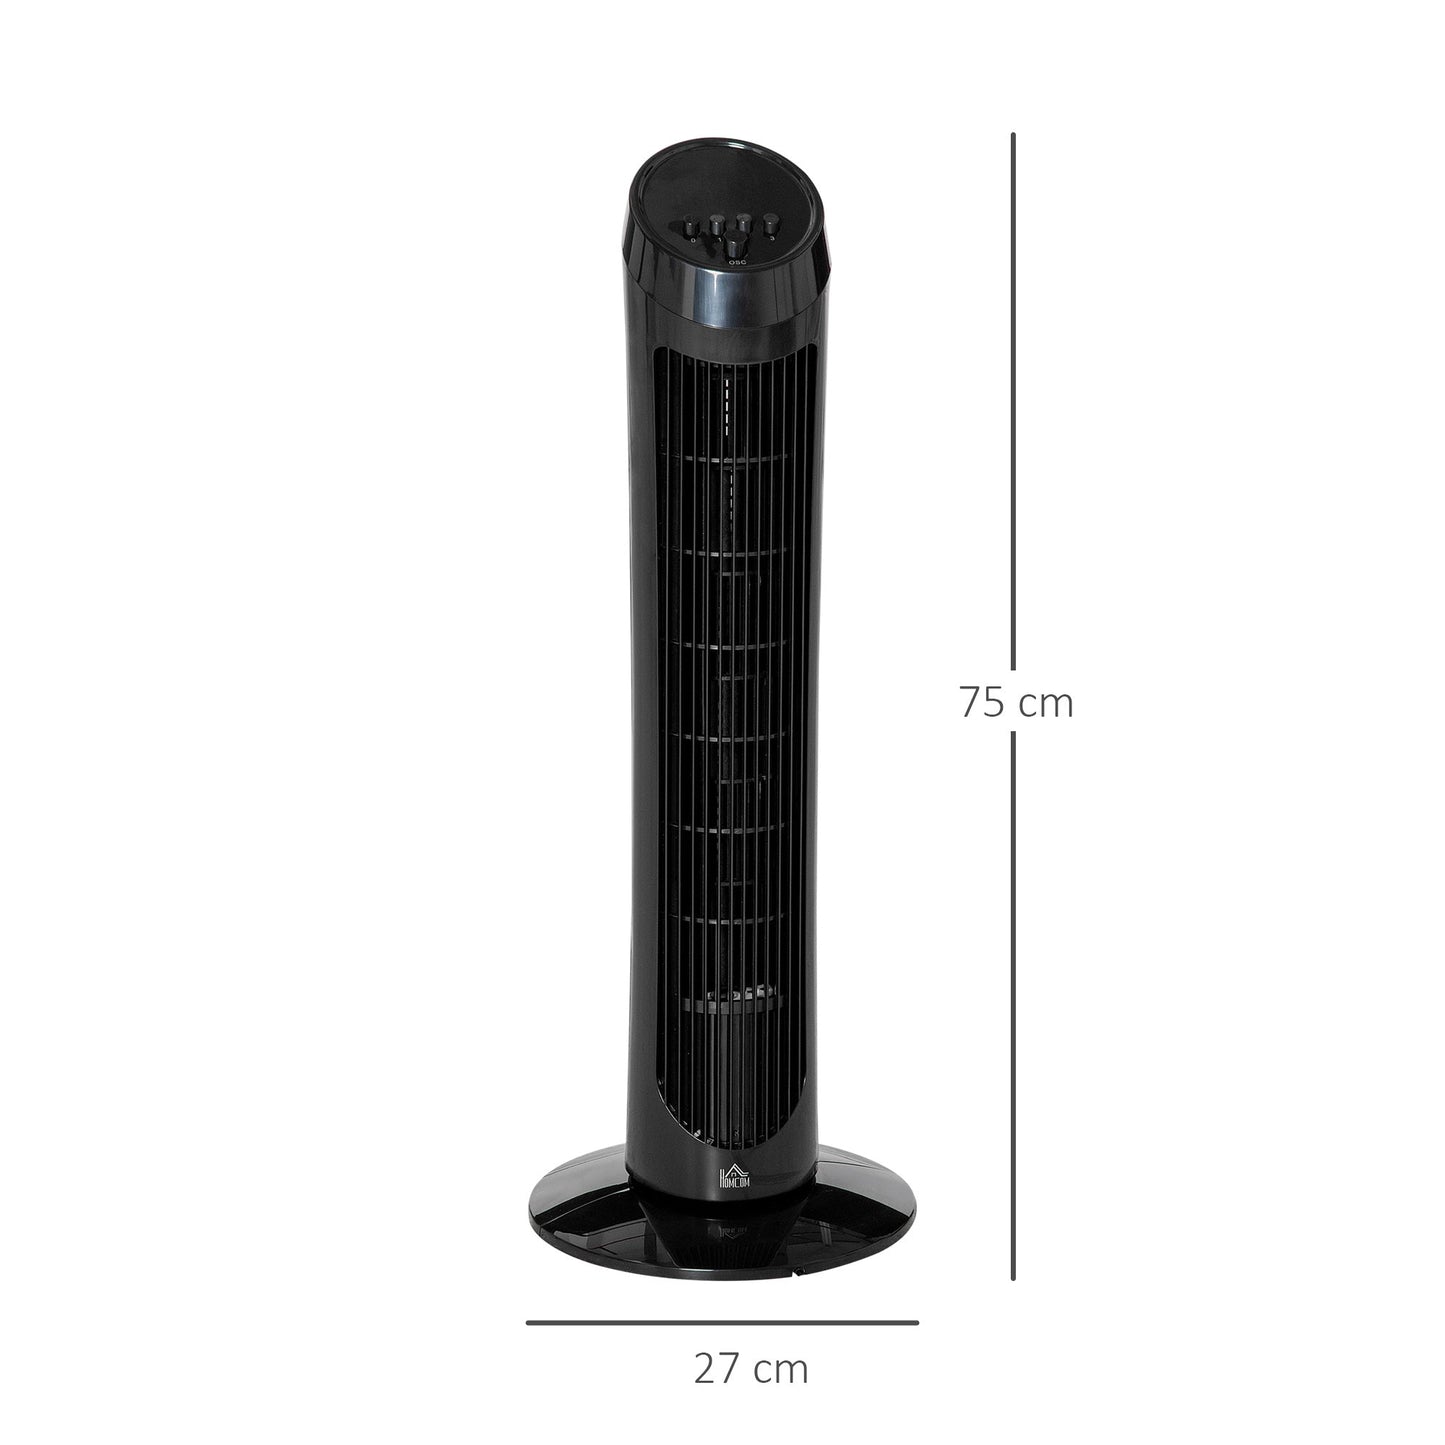 HOMCOM Ultra-Slim Tower Fan: 3 Speeds, Noise Reduction Tech for Indoor Cooling, Sleek Black